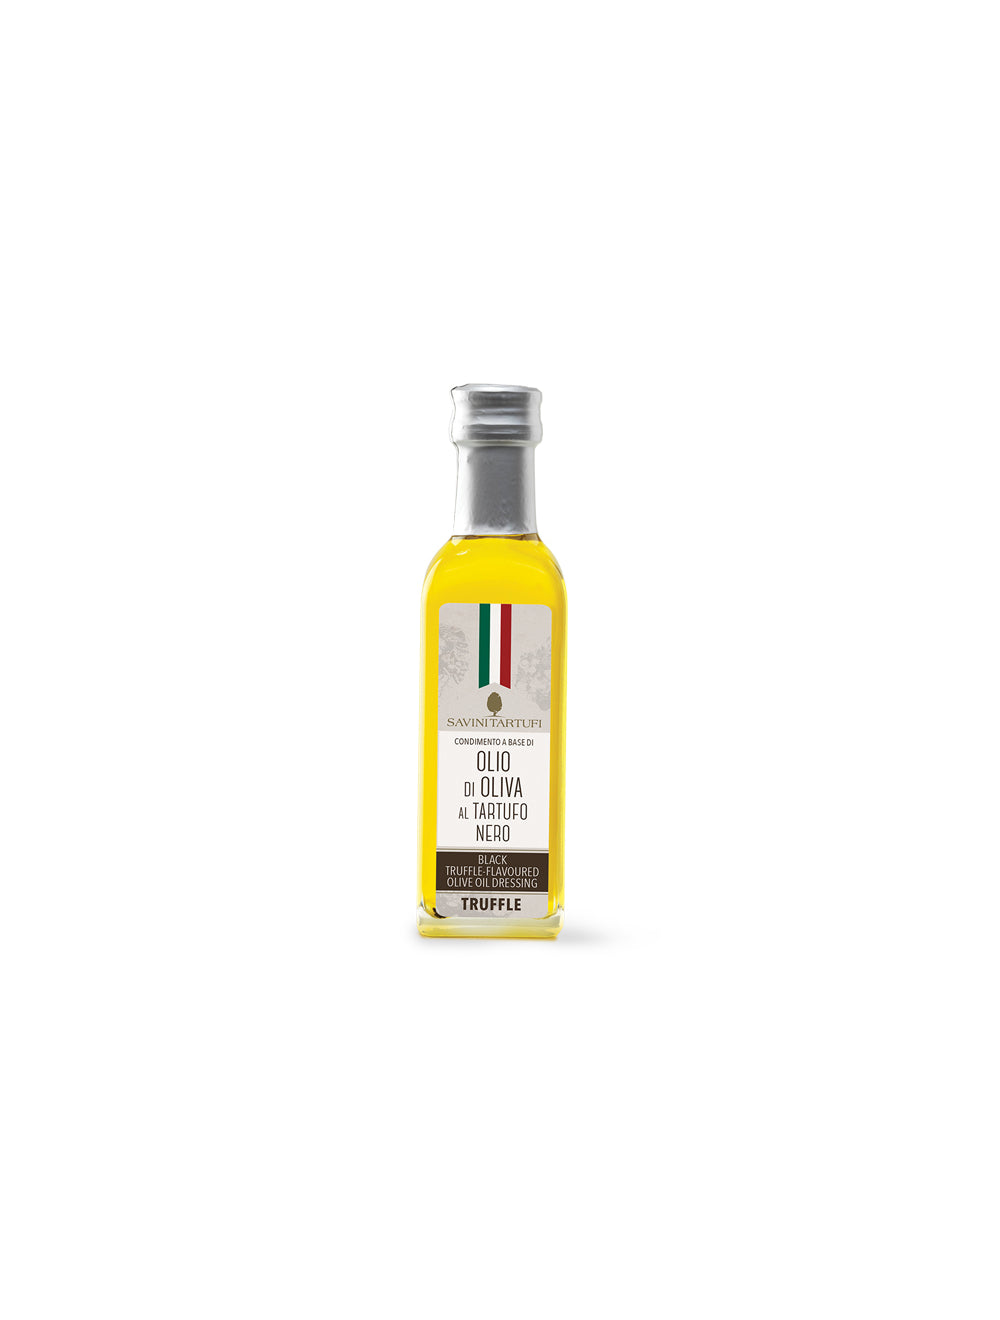 *SPECIAL* "Olio di Oliva al Tartufo Nero" Olive Oil with Black Truffle flavor by Savini Tartufi, 8.45 oz, 6/CS